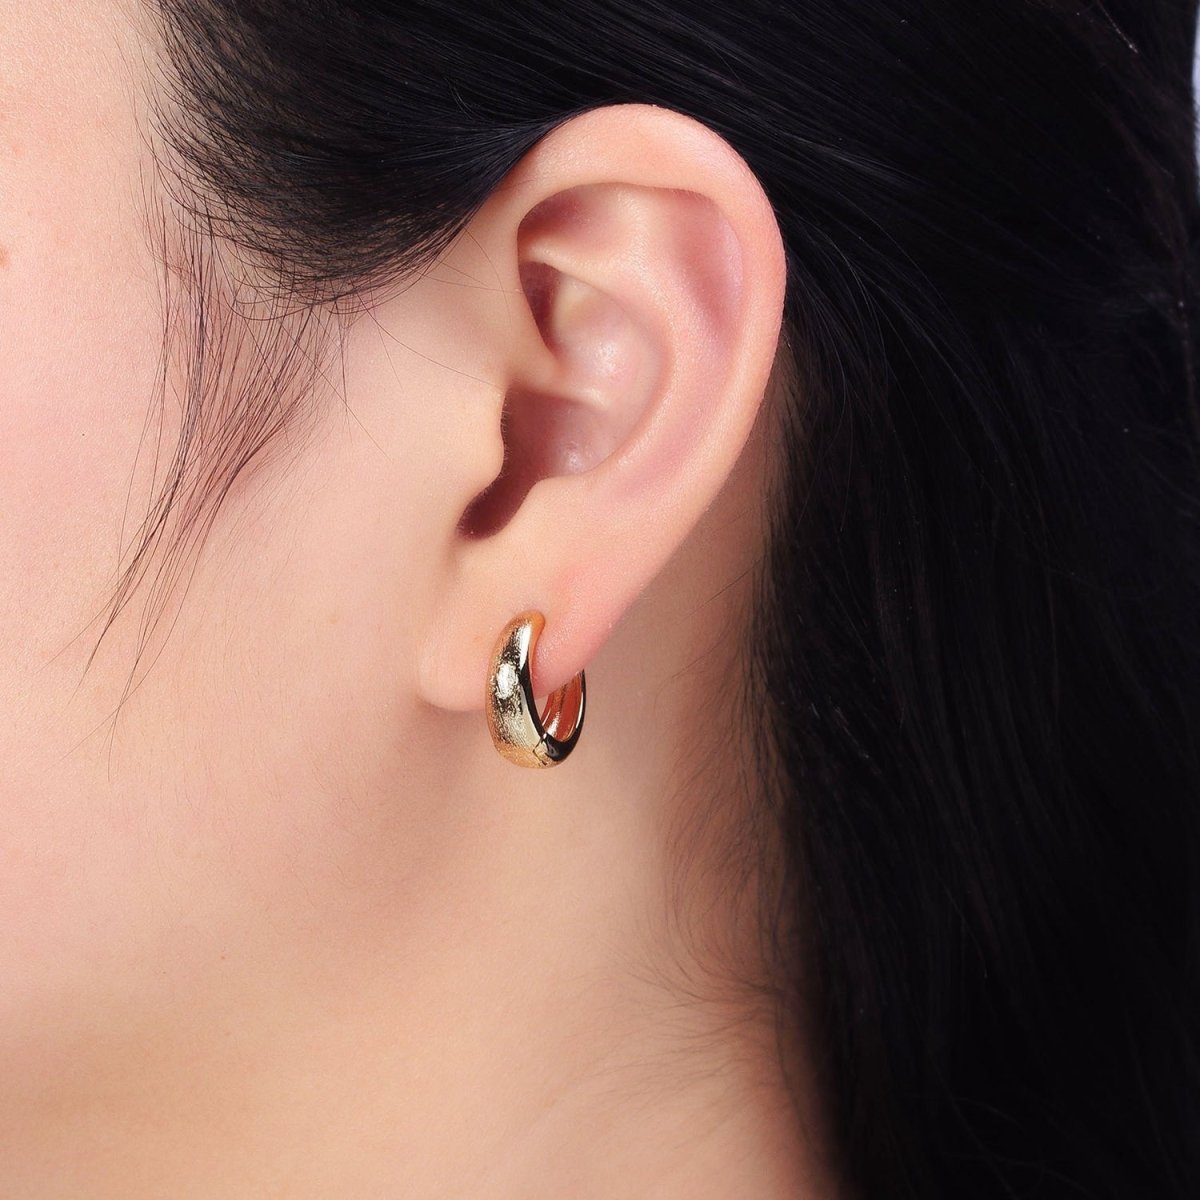 Dainty Gold Filled Huggie Earring Simple Minimalist 16mm Hoop Earring AB750 - DLUXCA